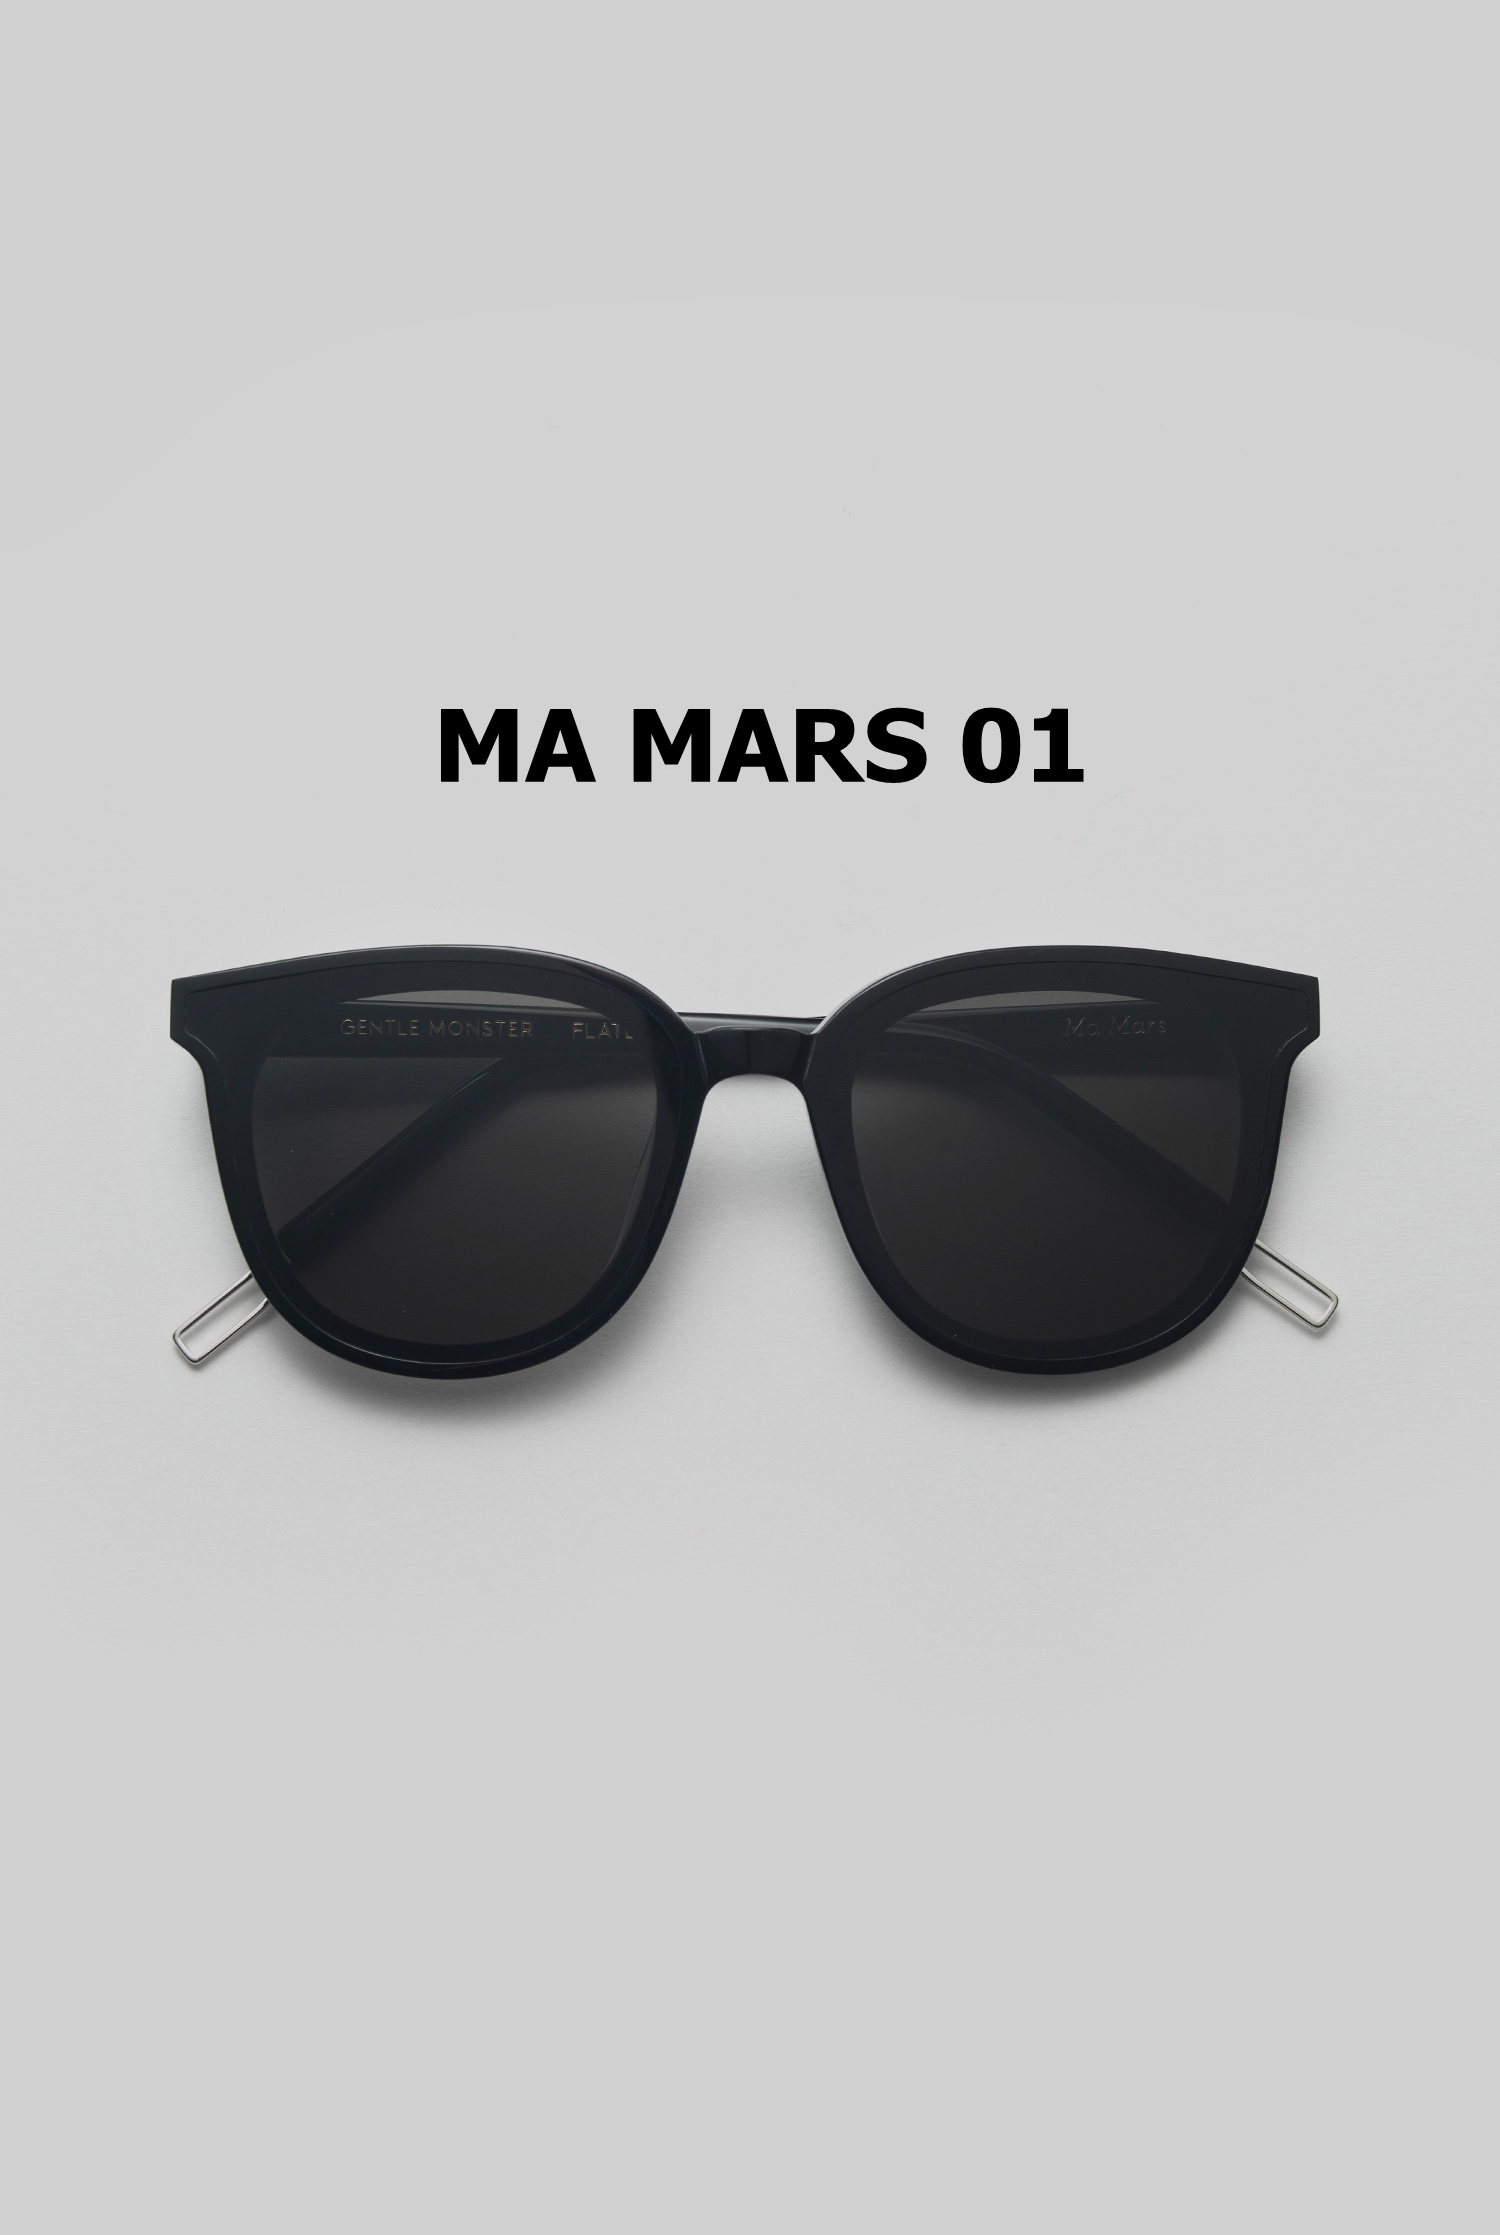 MA MARS 01 